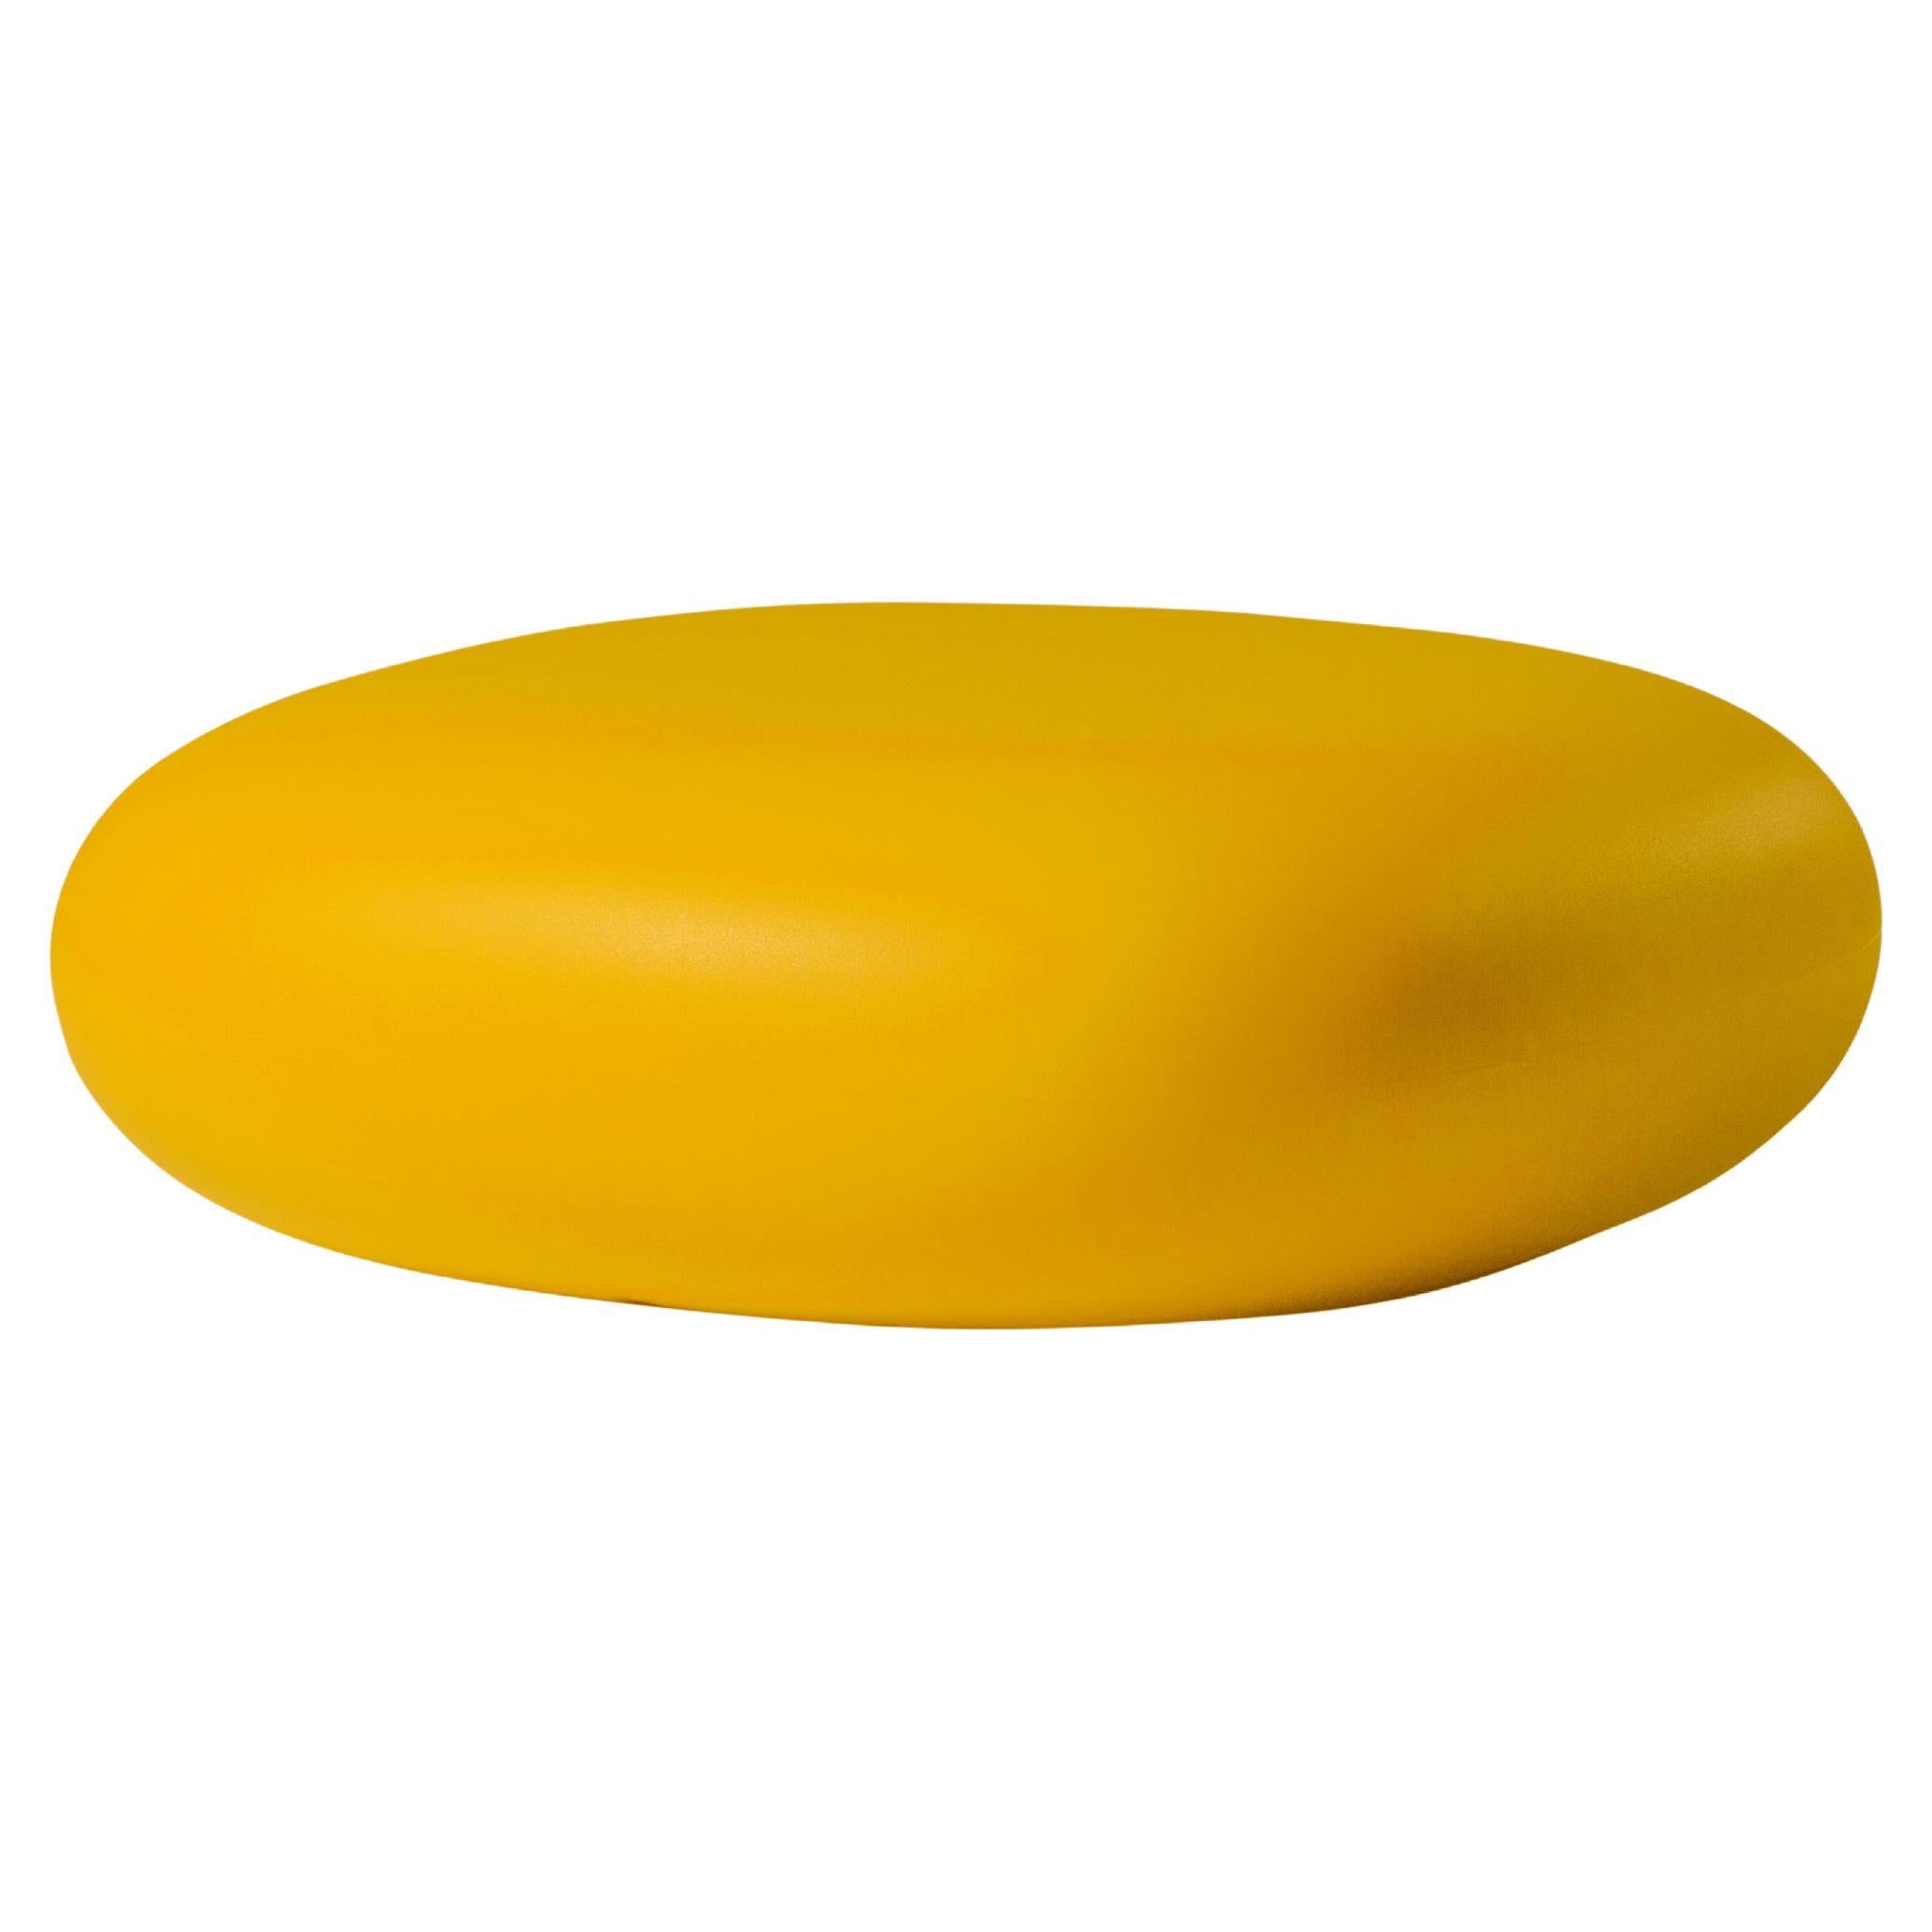 Slide Design Chubby Low Pouf in Saffron Yellow by Marcel Wanders For Sale